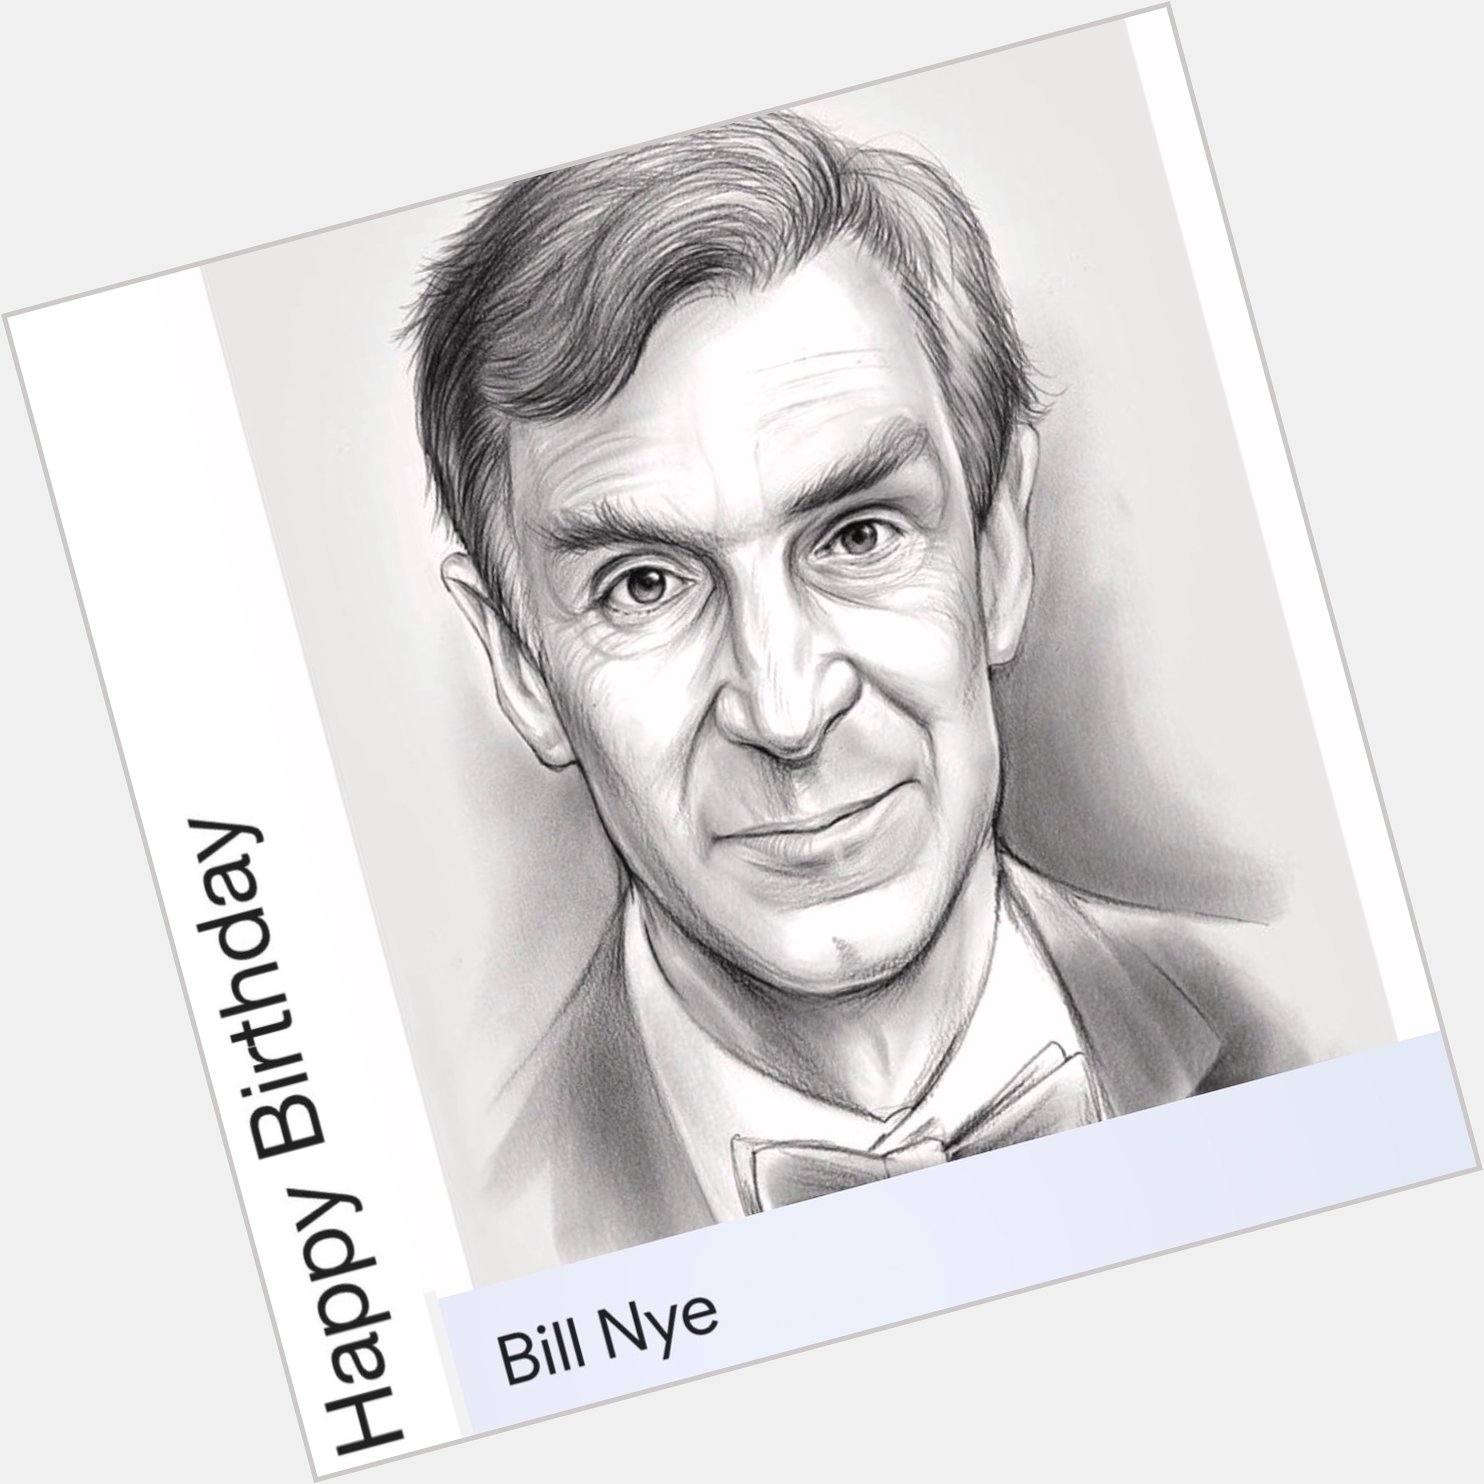 Happy birthday to 
Bill Nye, the science guy ....born November 27, 1955 